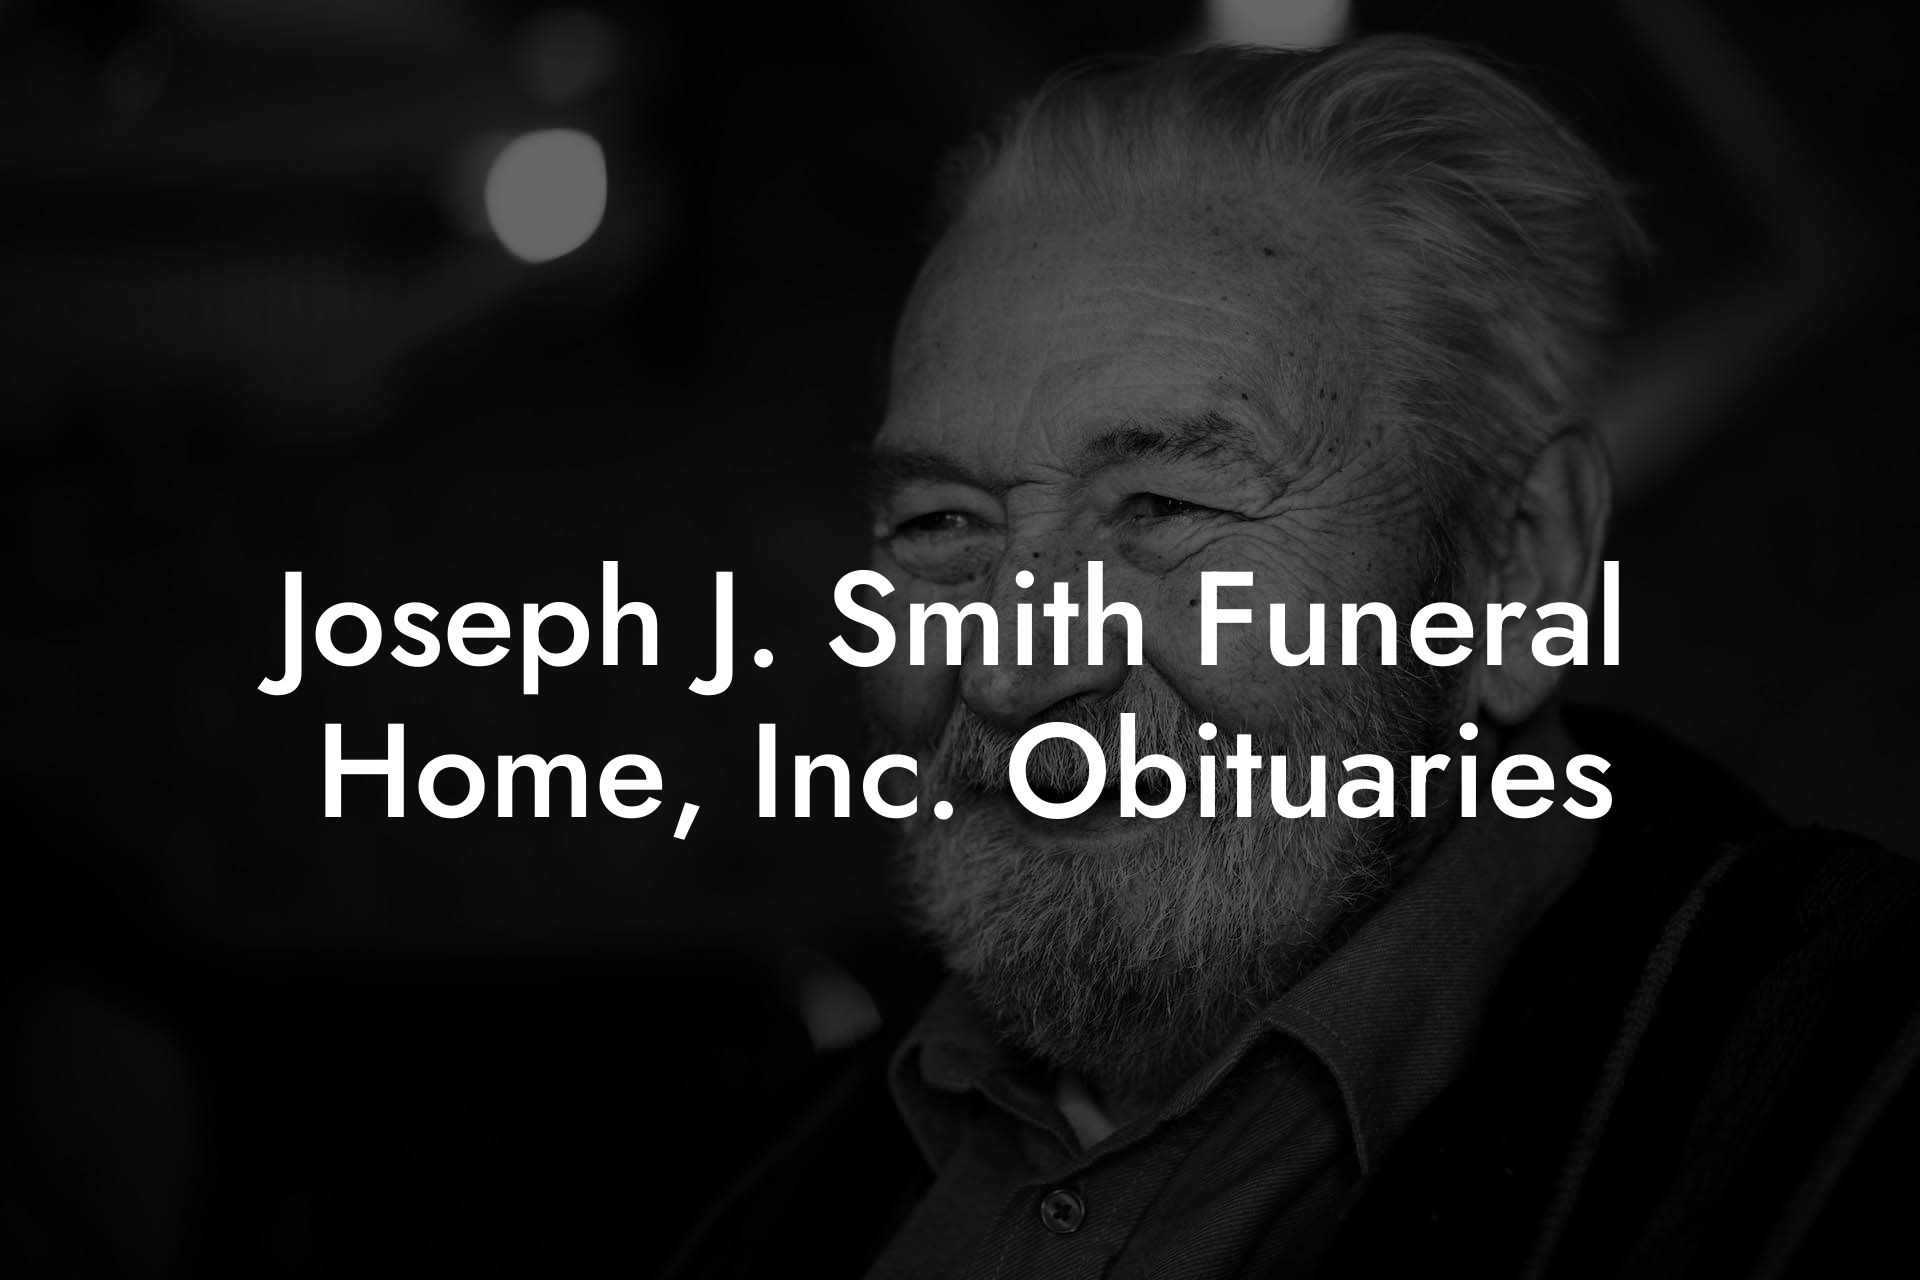 Joseph J. Smith Funeral Home, Inc. Obituaries